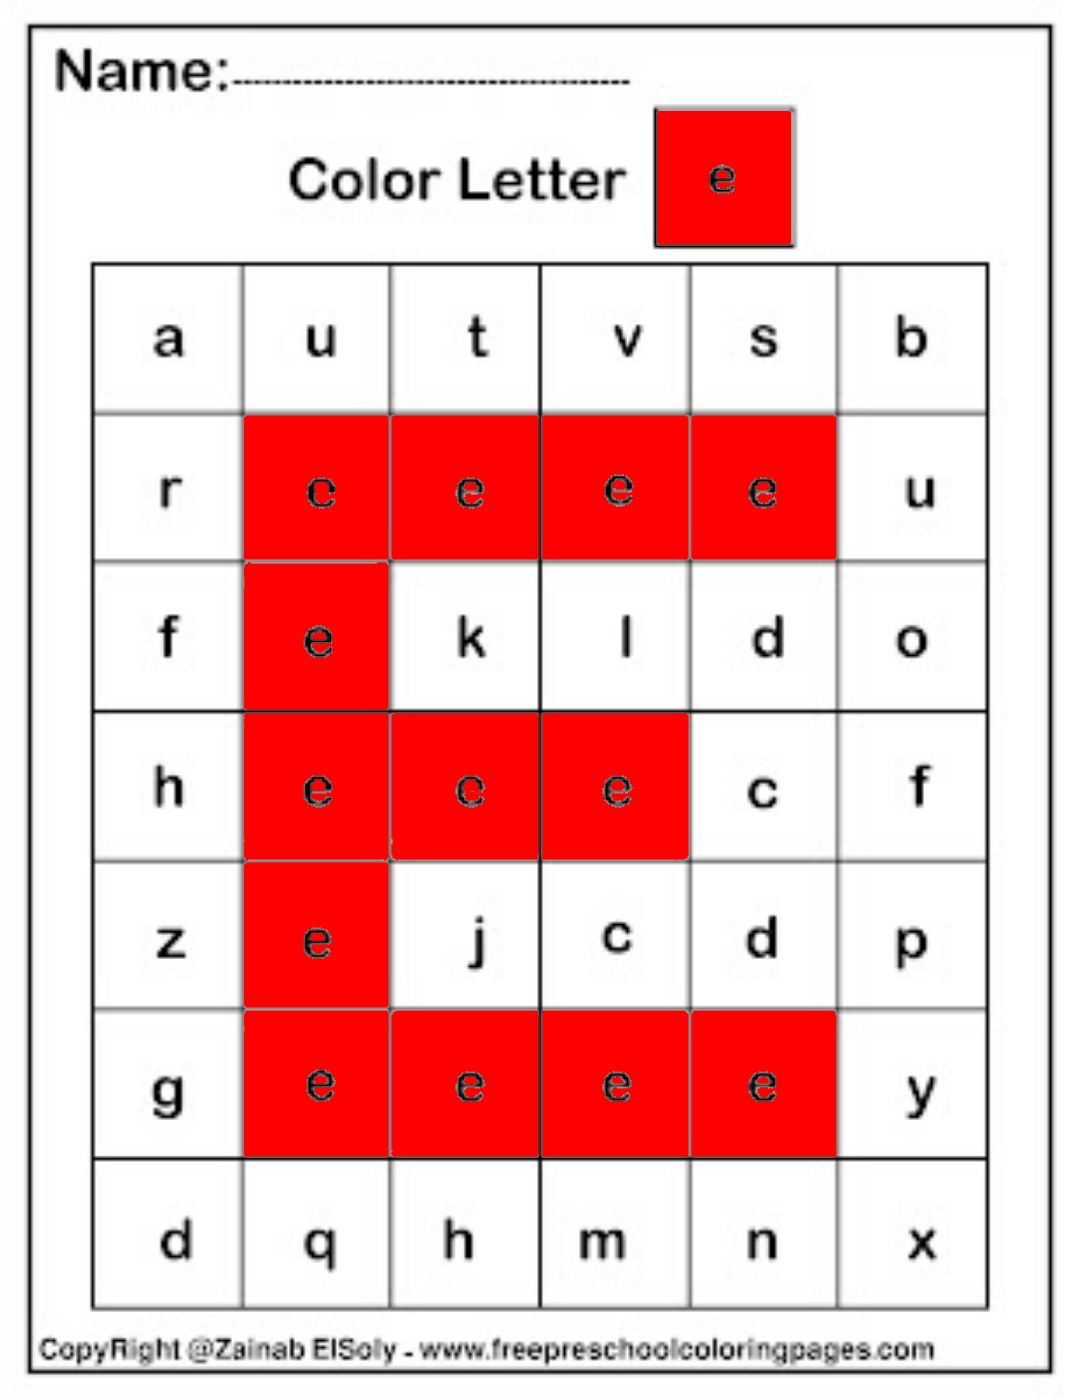  Color দ্বারা Letter e Square Pïxels Free Preschool